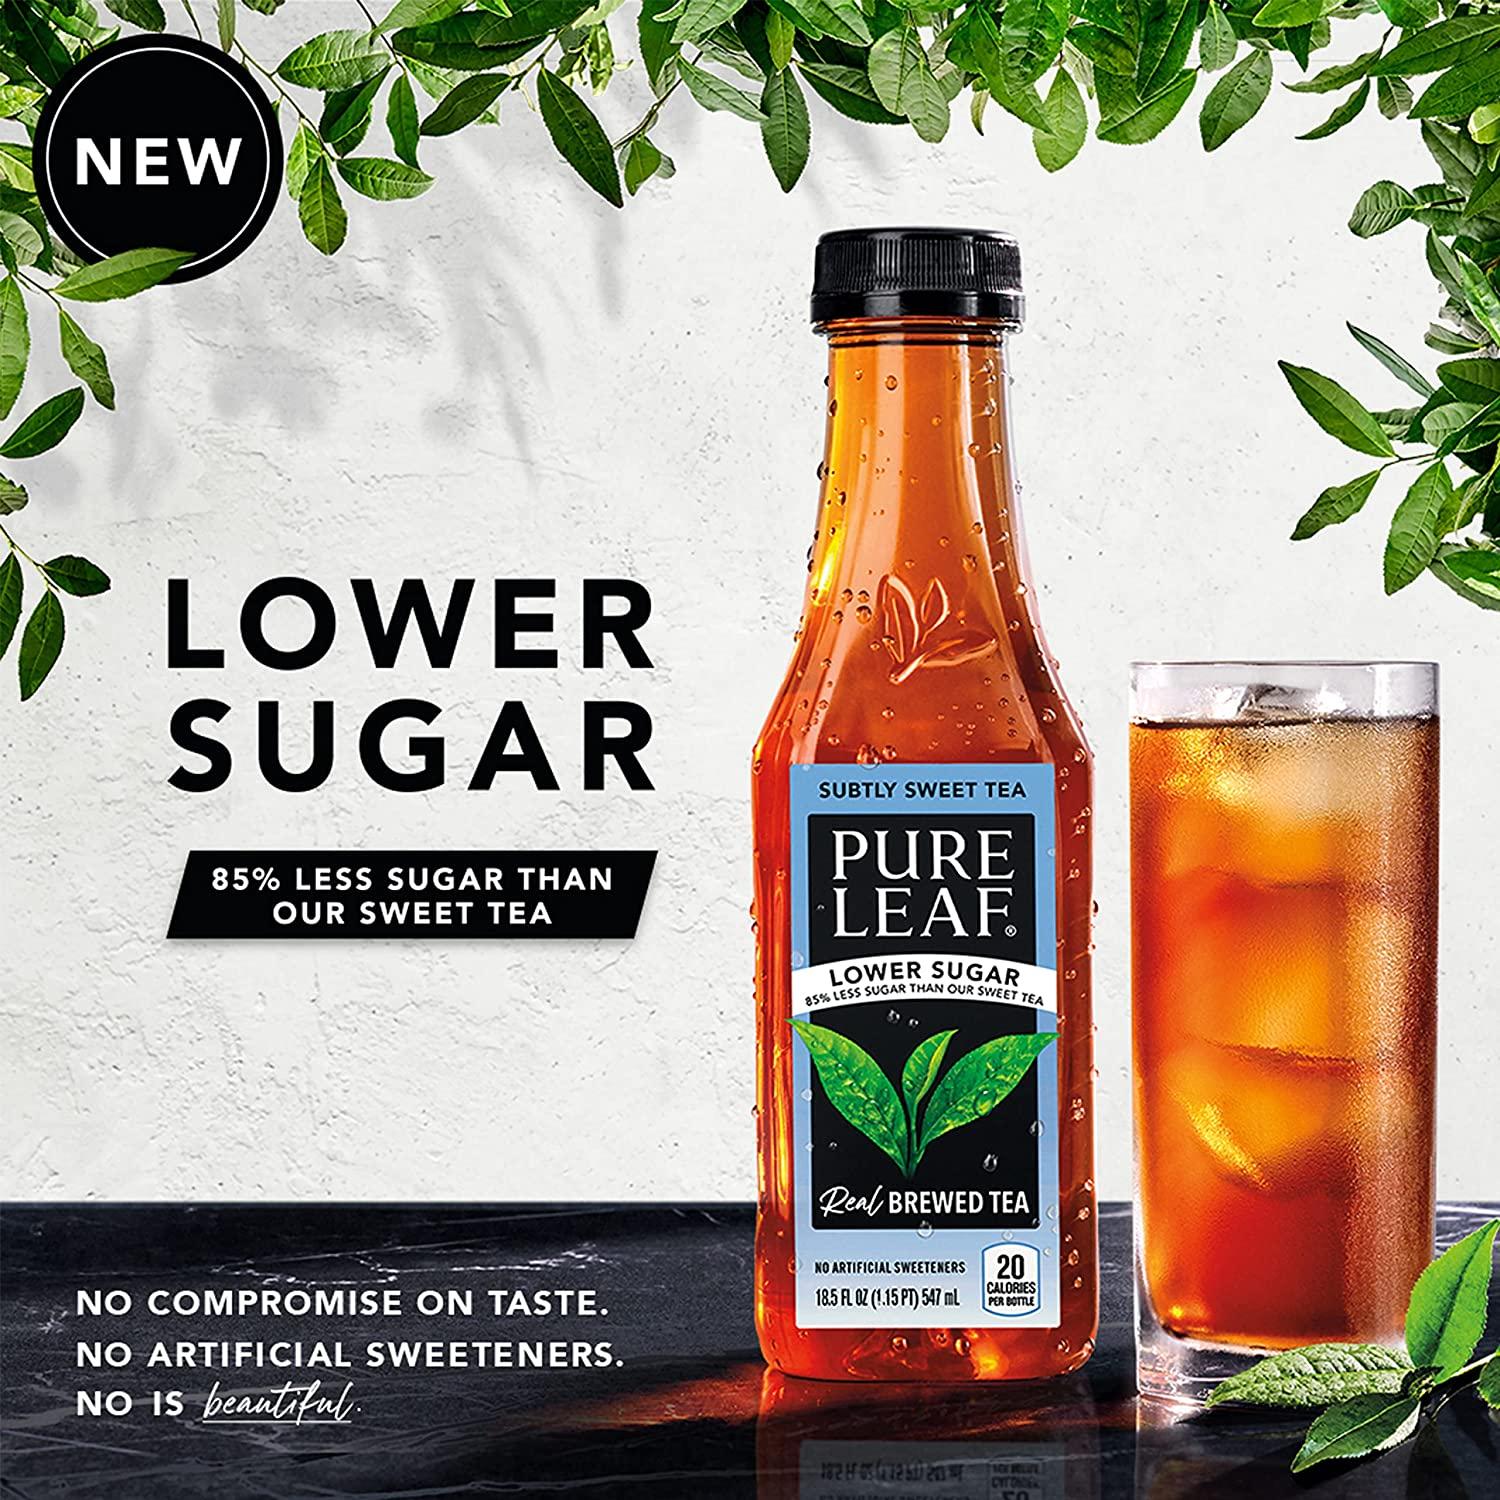 Pure Leaf Iced Tea Bottles Sweet, 18.5 Fl Oz (Pack of 12)